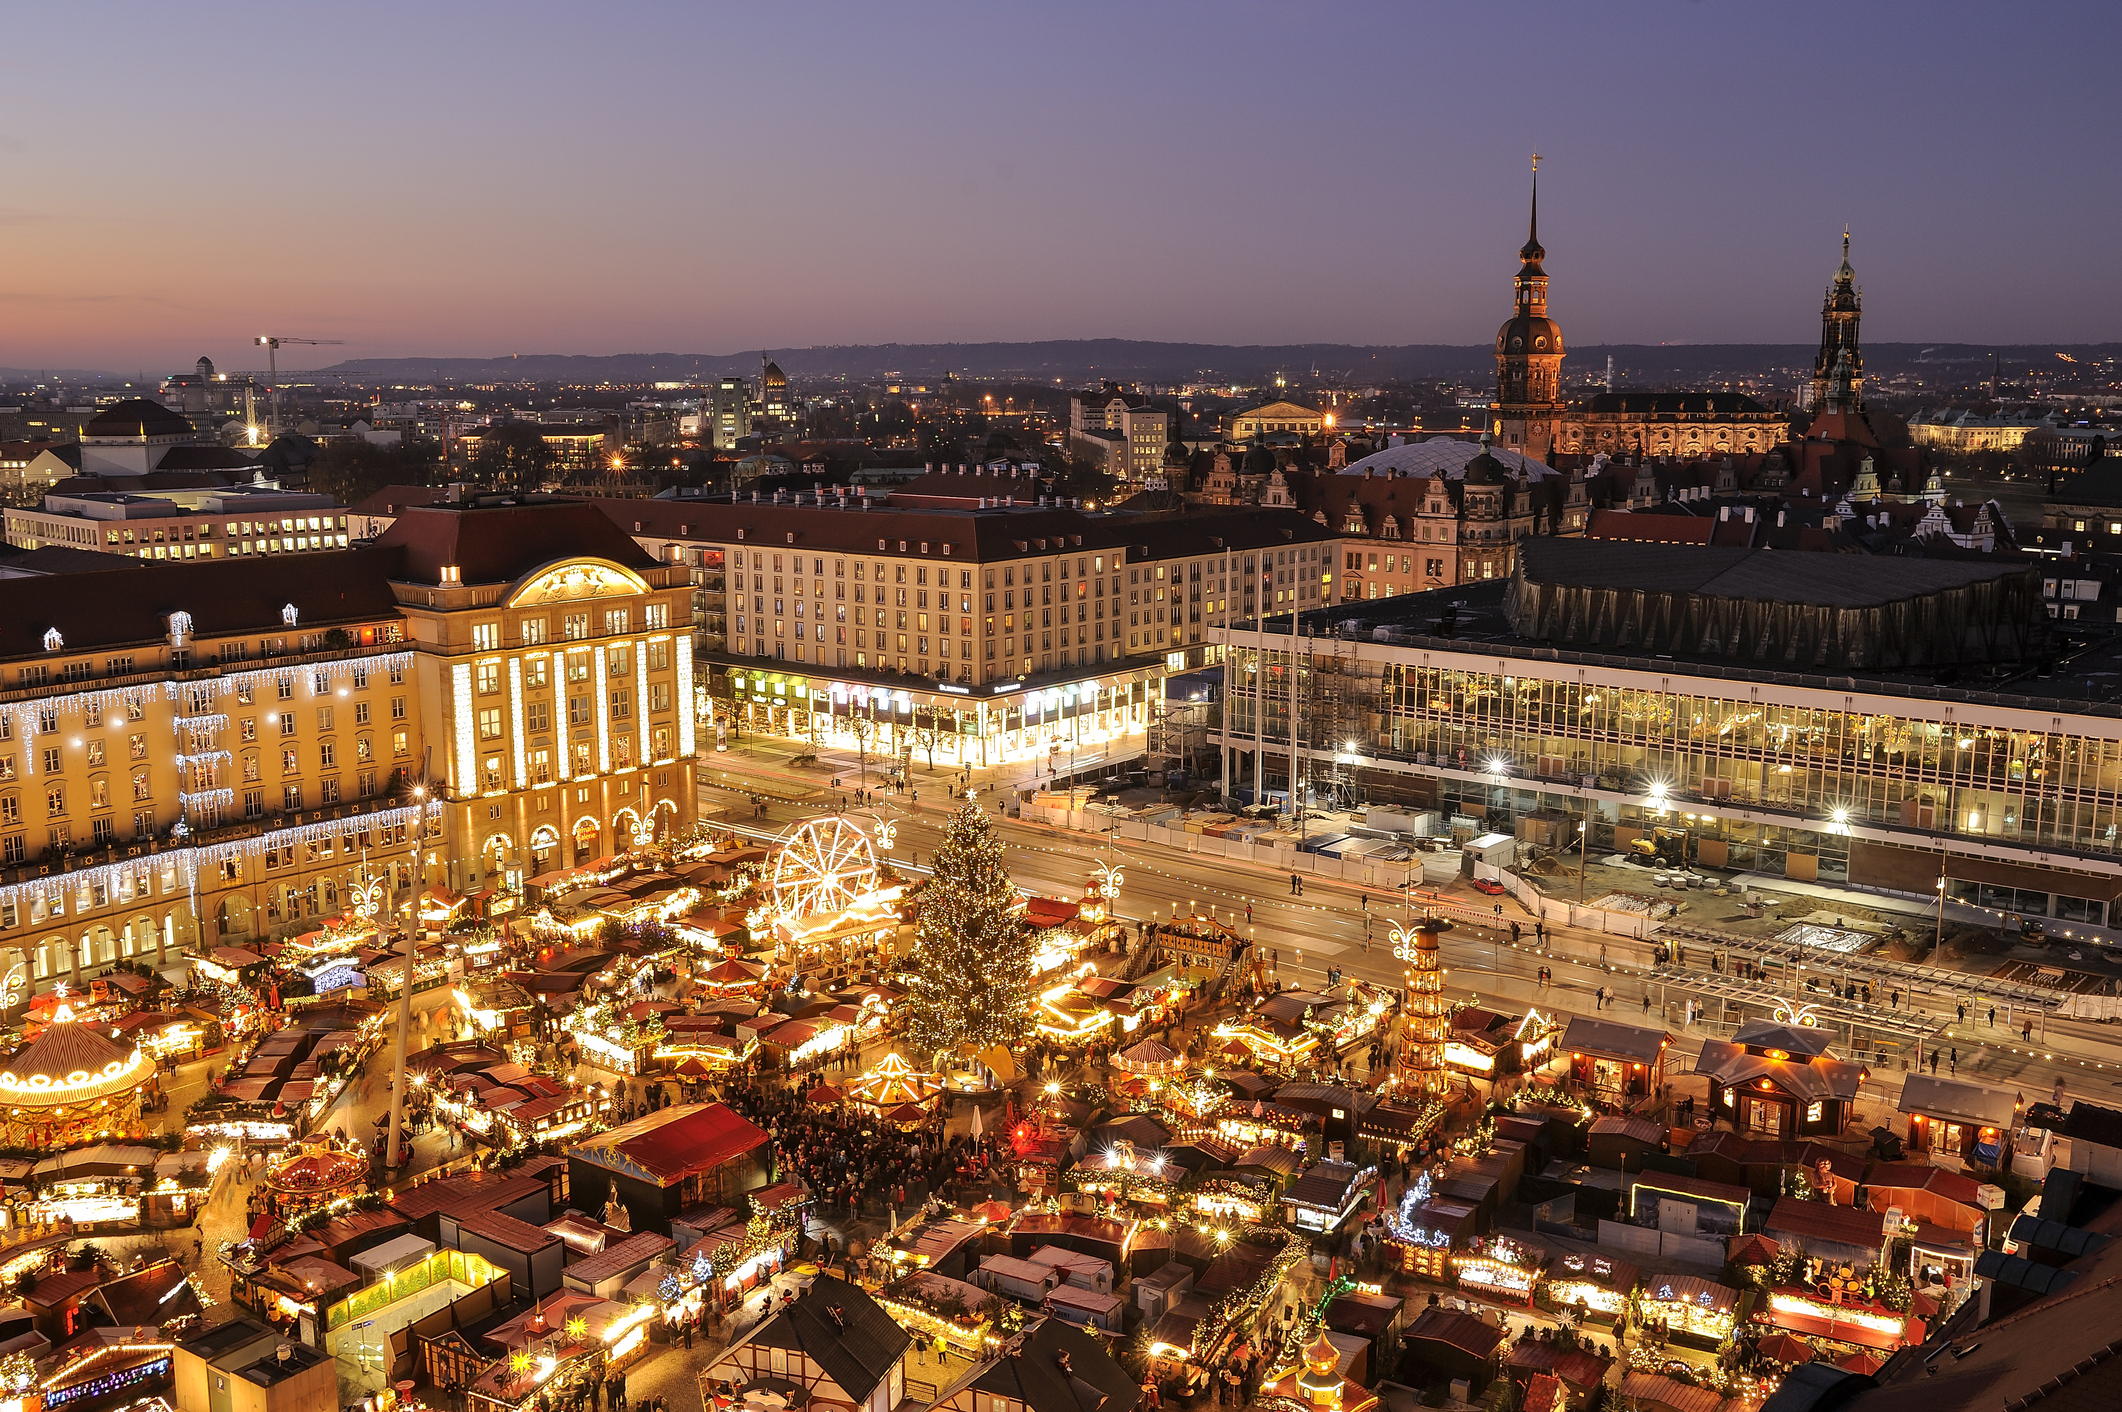 Germany’s enchanting Christmas markets